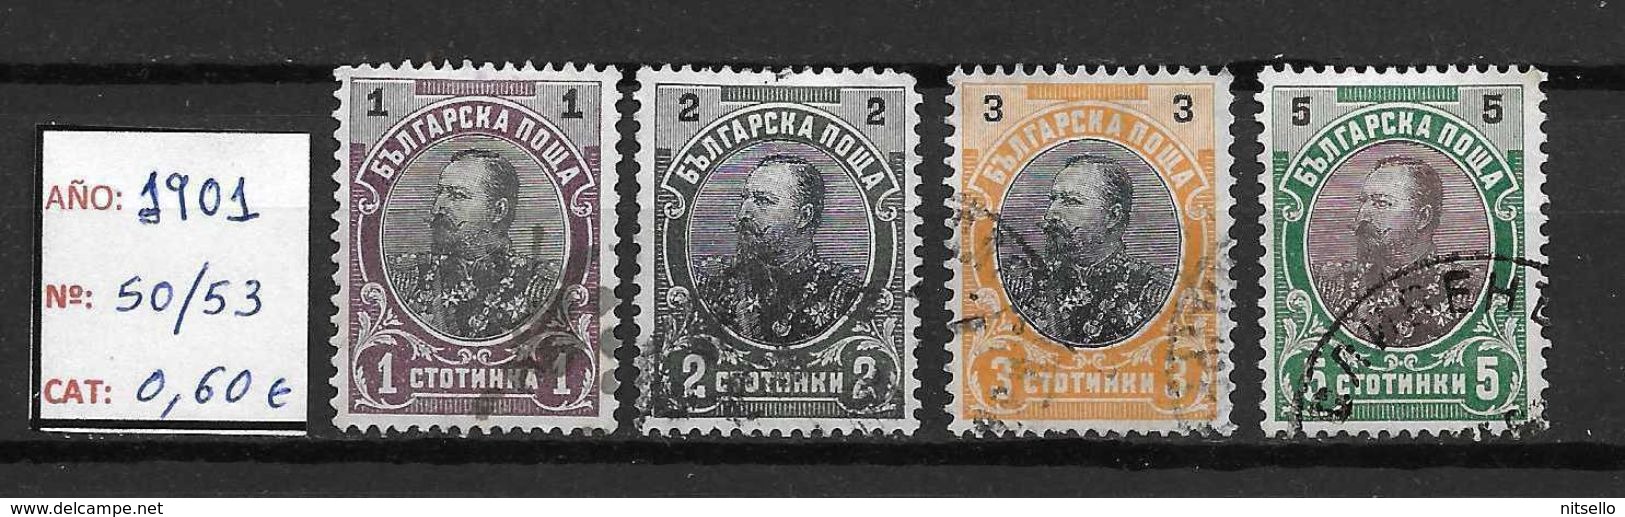 LOTE 1419  ///  BULGARIA  1901     YVERT Nº: 50/53    CATALOG./COTE: 0,60€ - Used Stamps